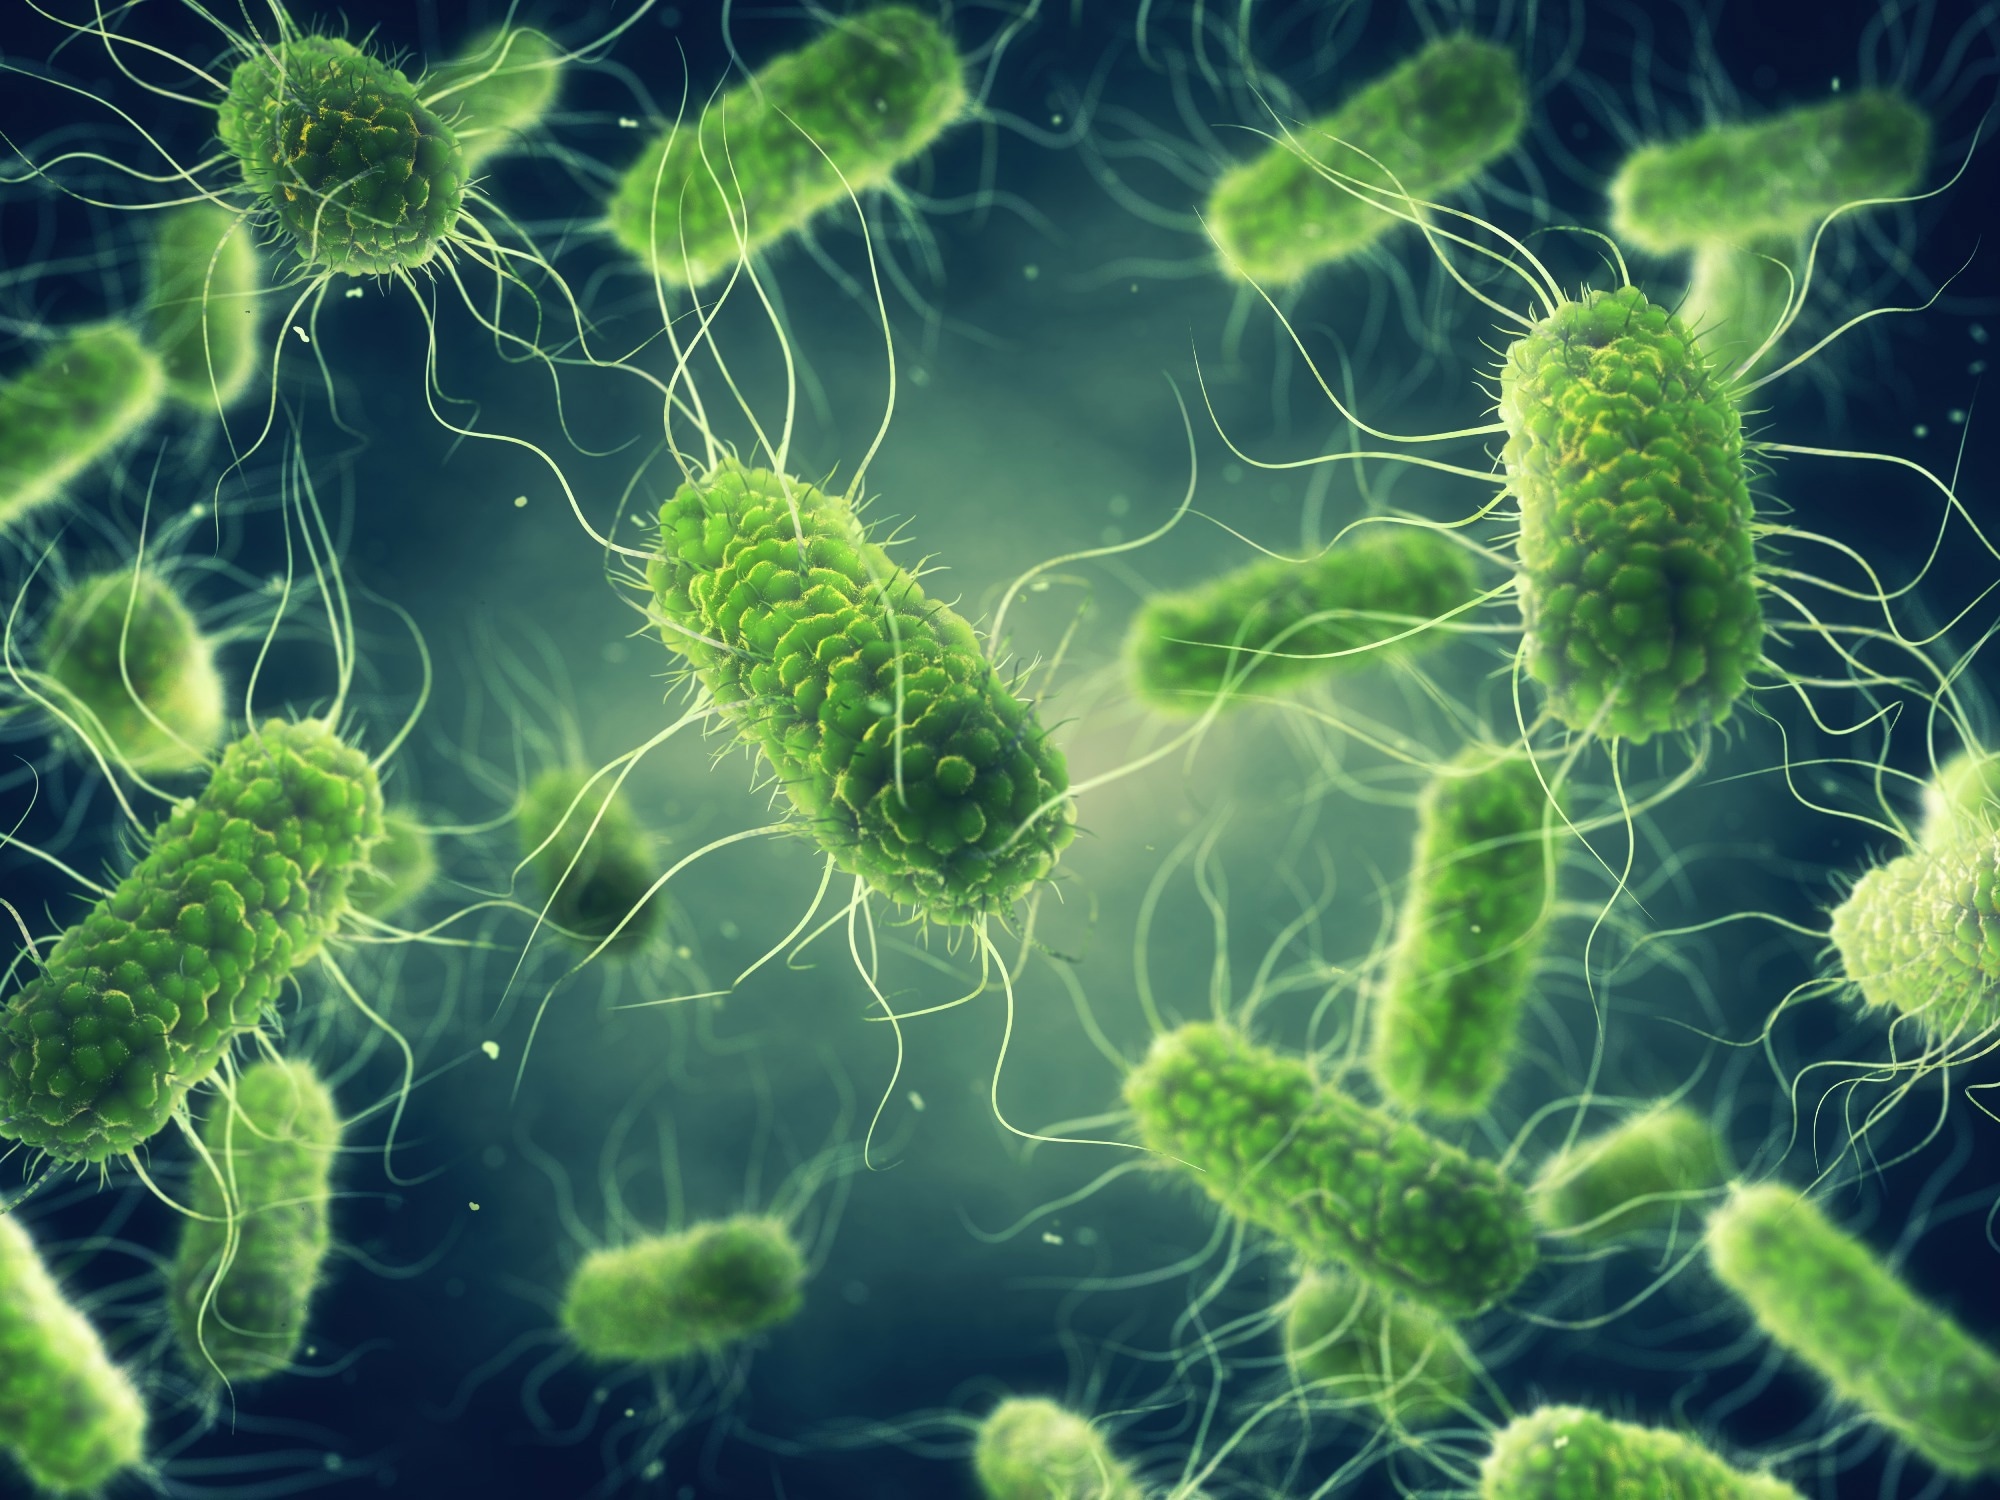 Study: Pathogen evolution during vaccination campaigns. Image Credit: nobeastsofierce/Shutterstock